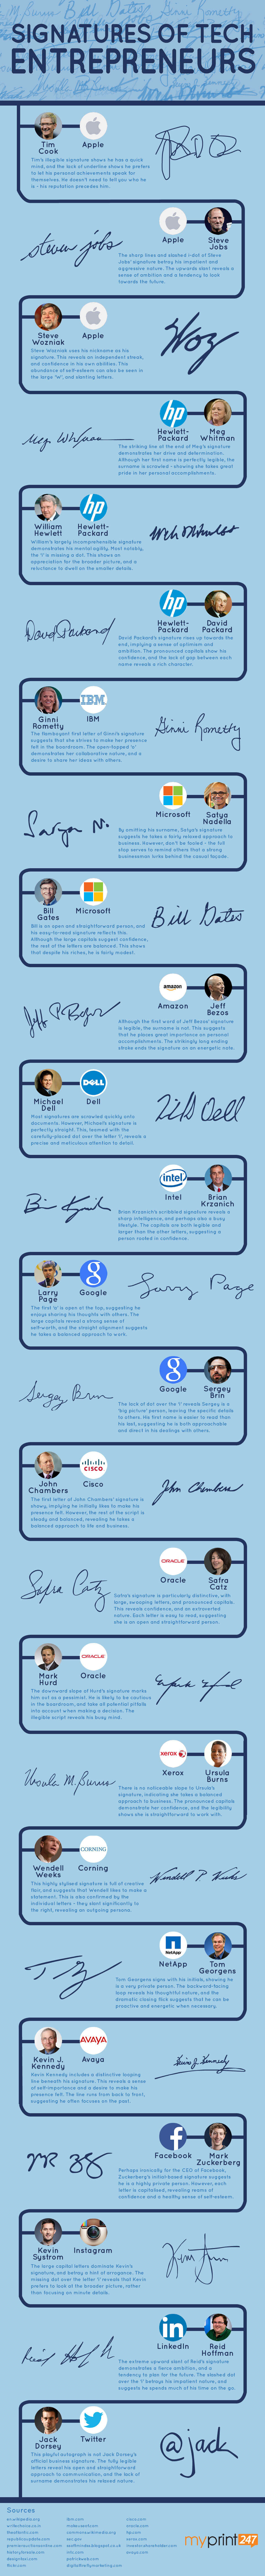 Signature of celebrities like Signature of Celebrities: Steve Jobs, Mark Zuckerberg, Bill Gates, Larry page